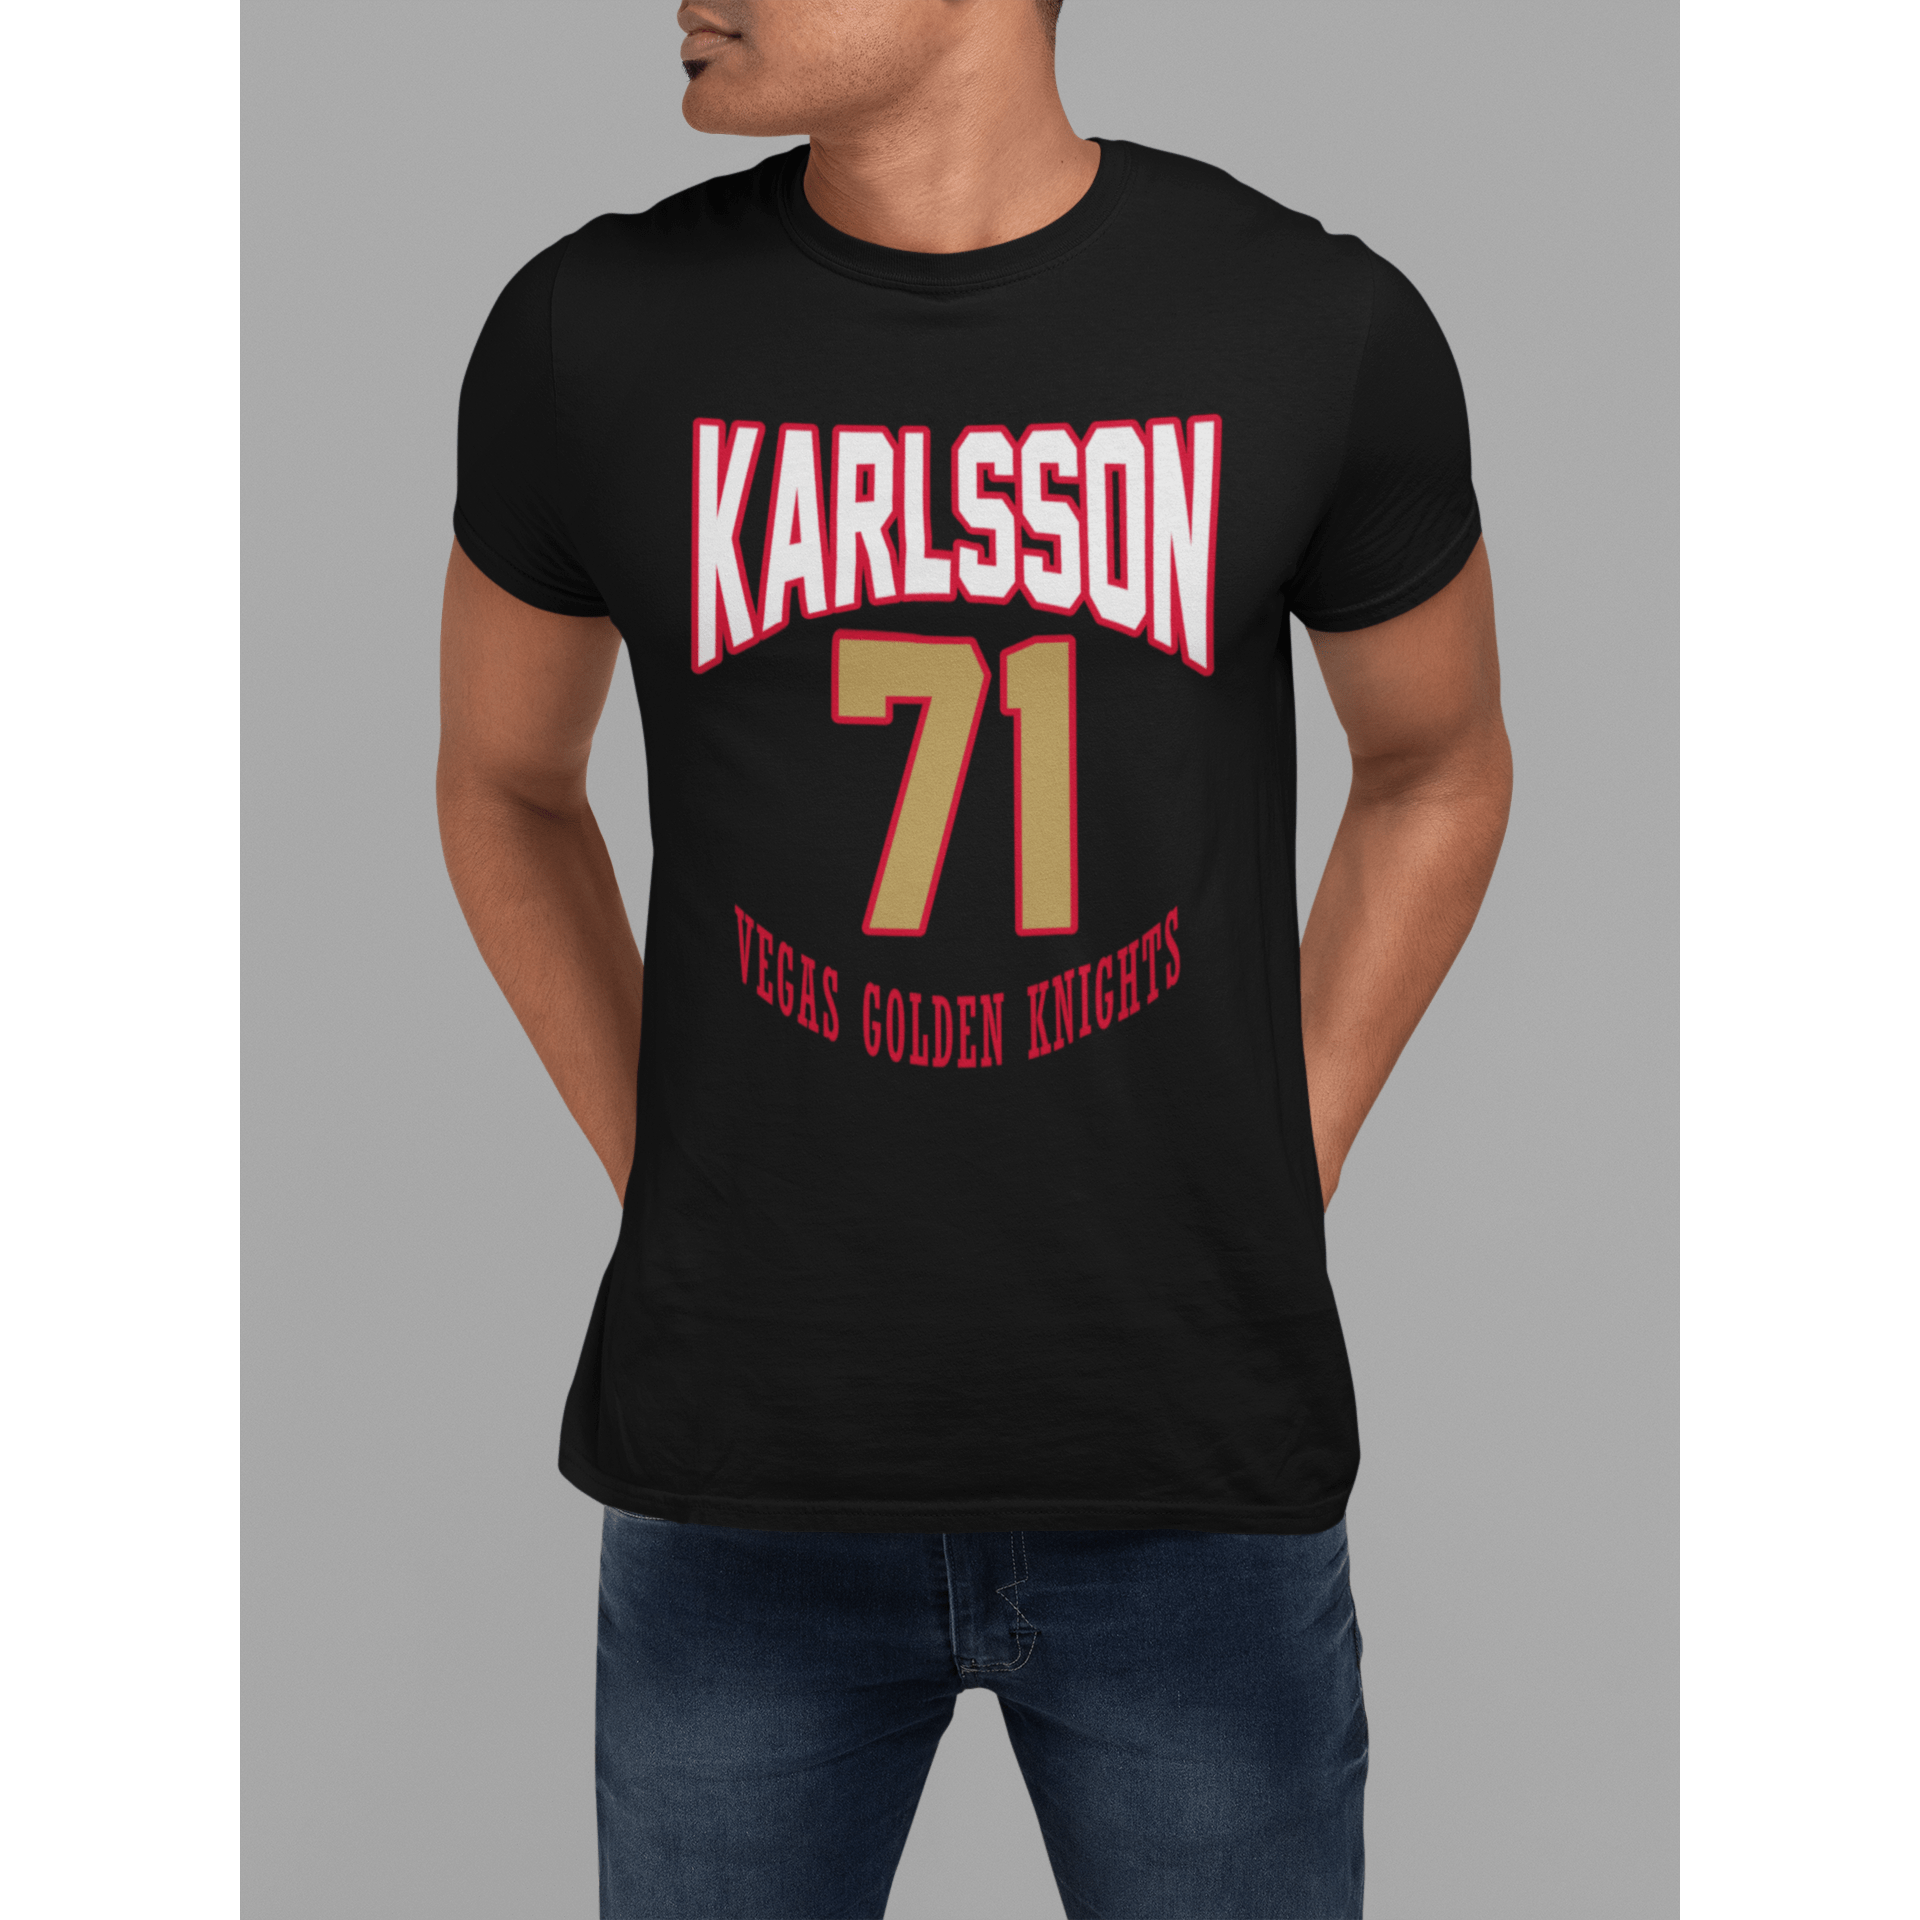 T-Shirt Karlsson 71 Vegas Golden Knights Retro Unisex Jersey Tee